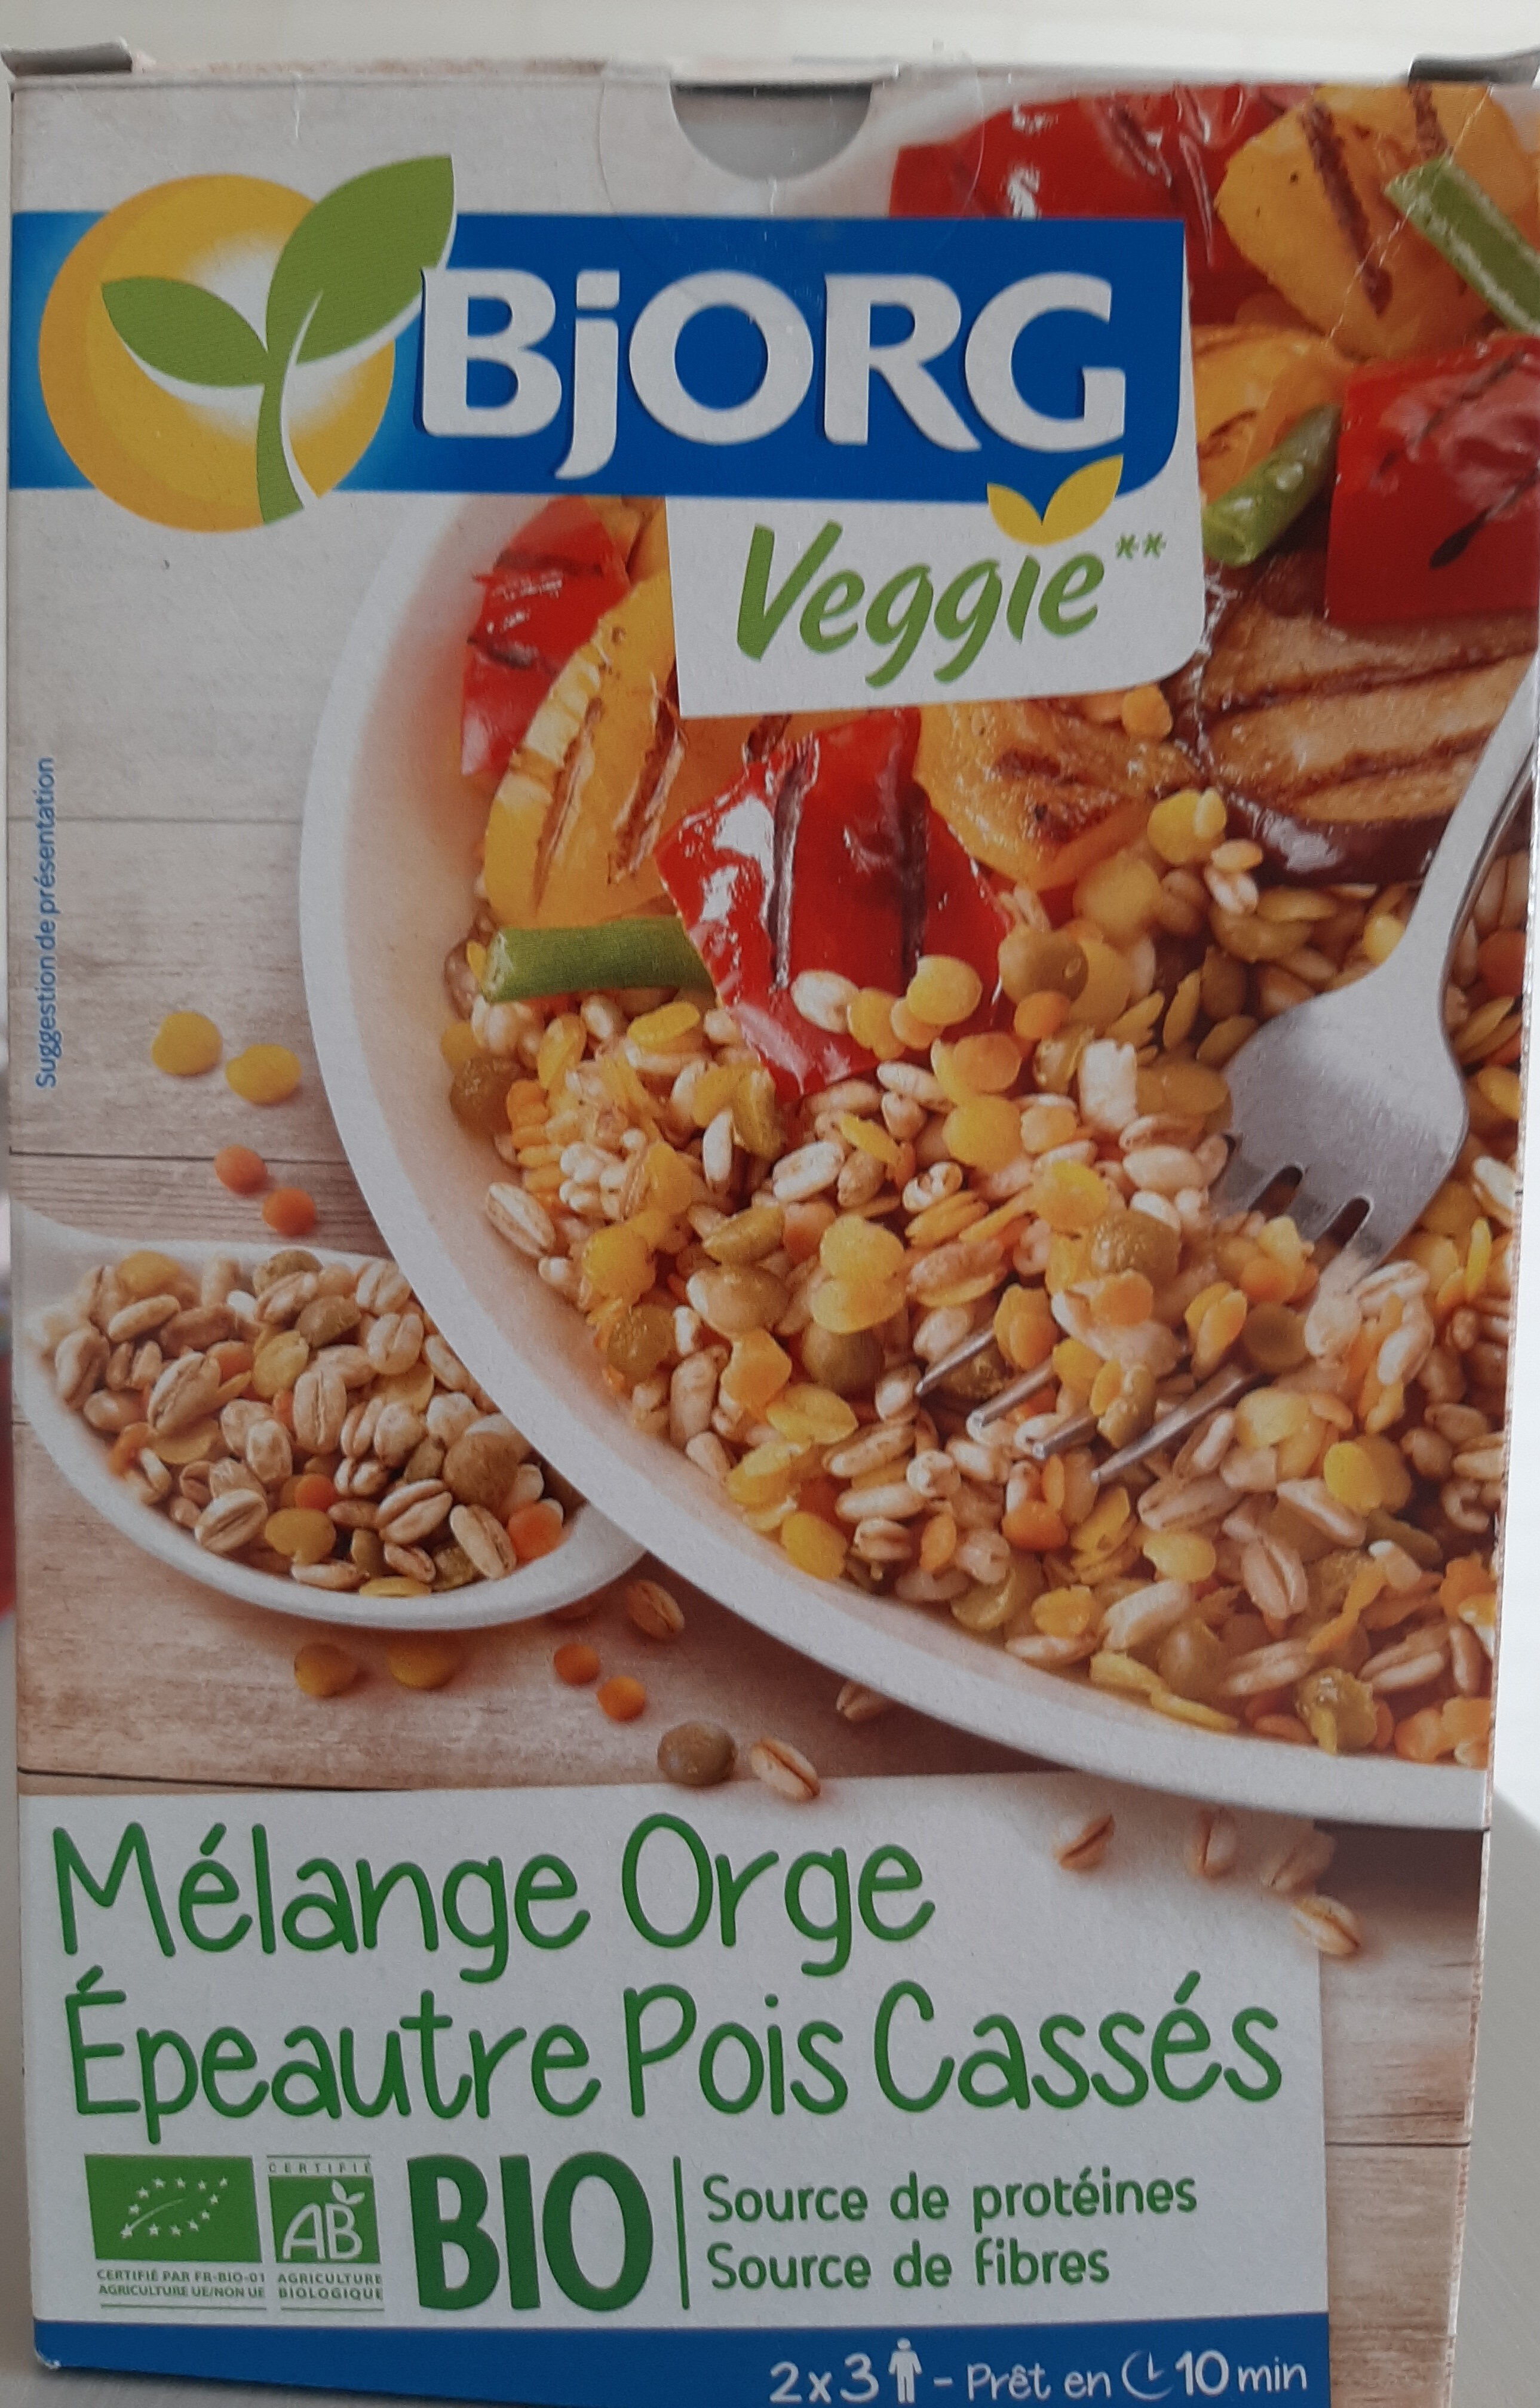 Bjorg veggie - Producto - fr